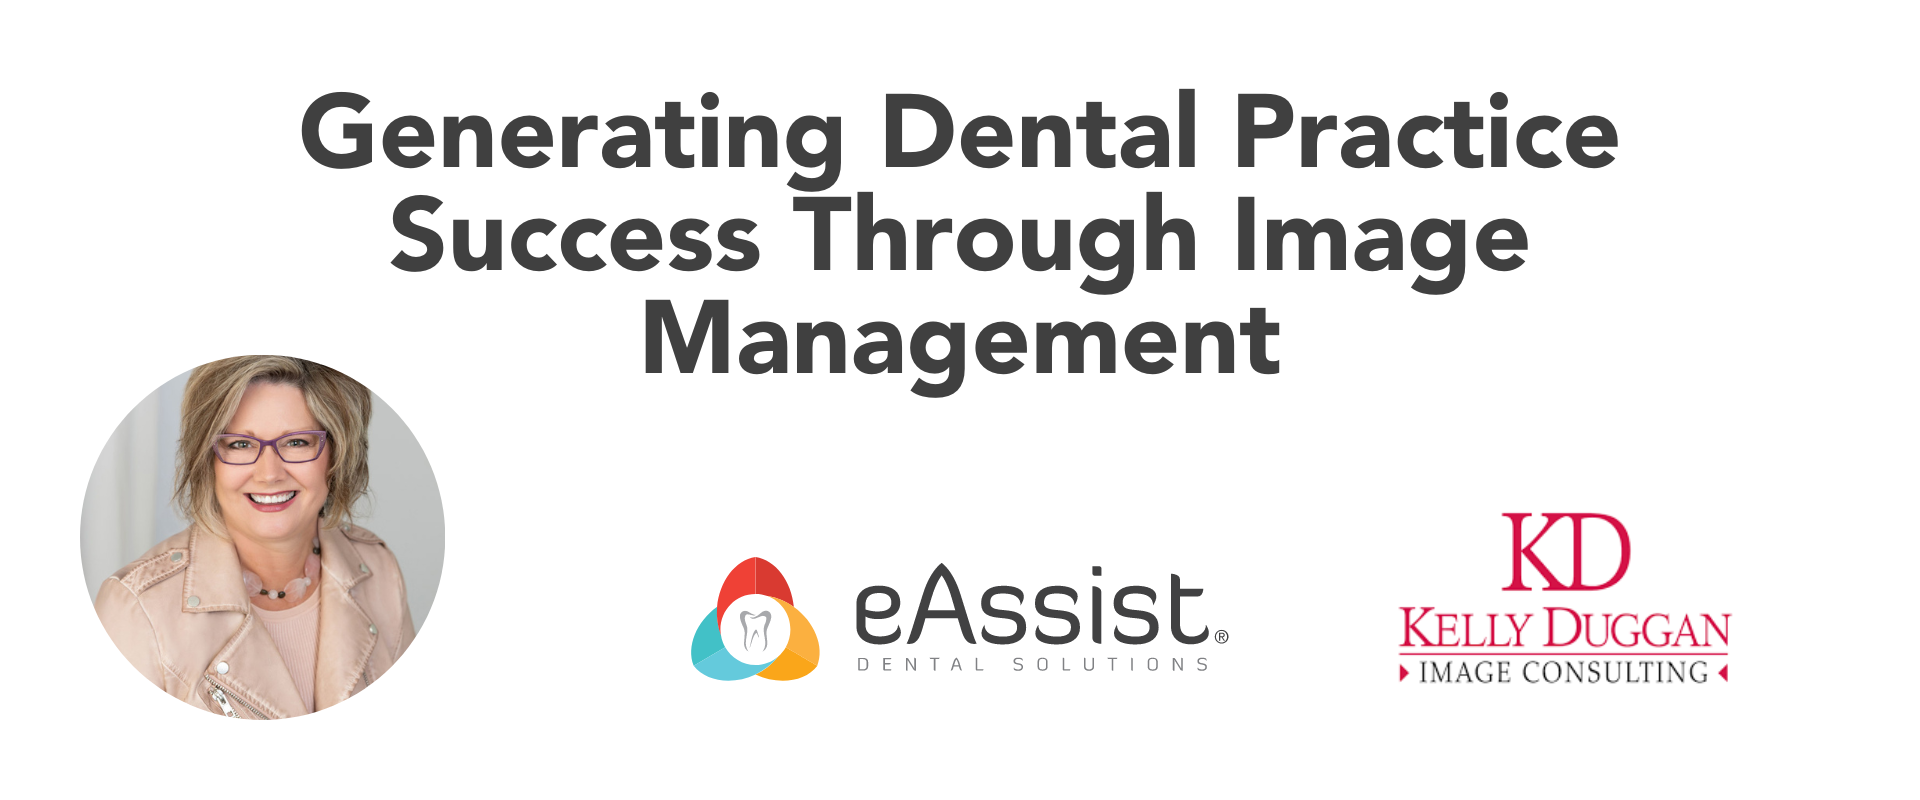 Generating Dental Practice Success Through Image Management